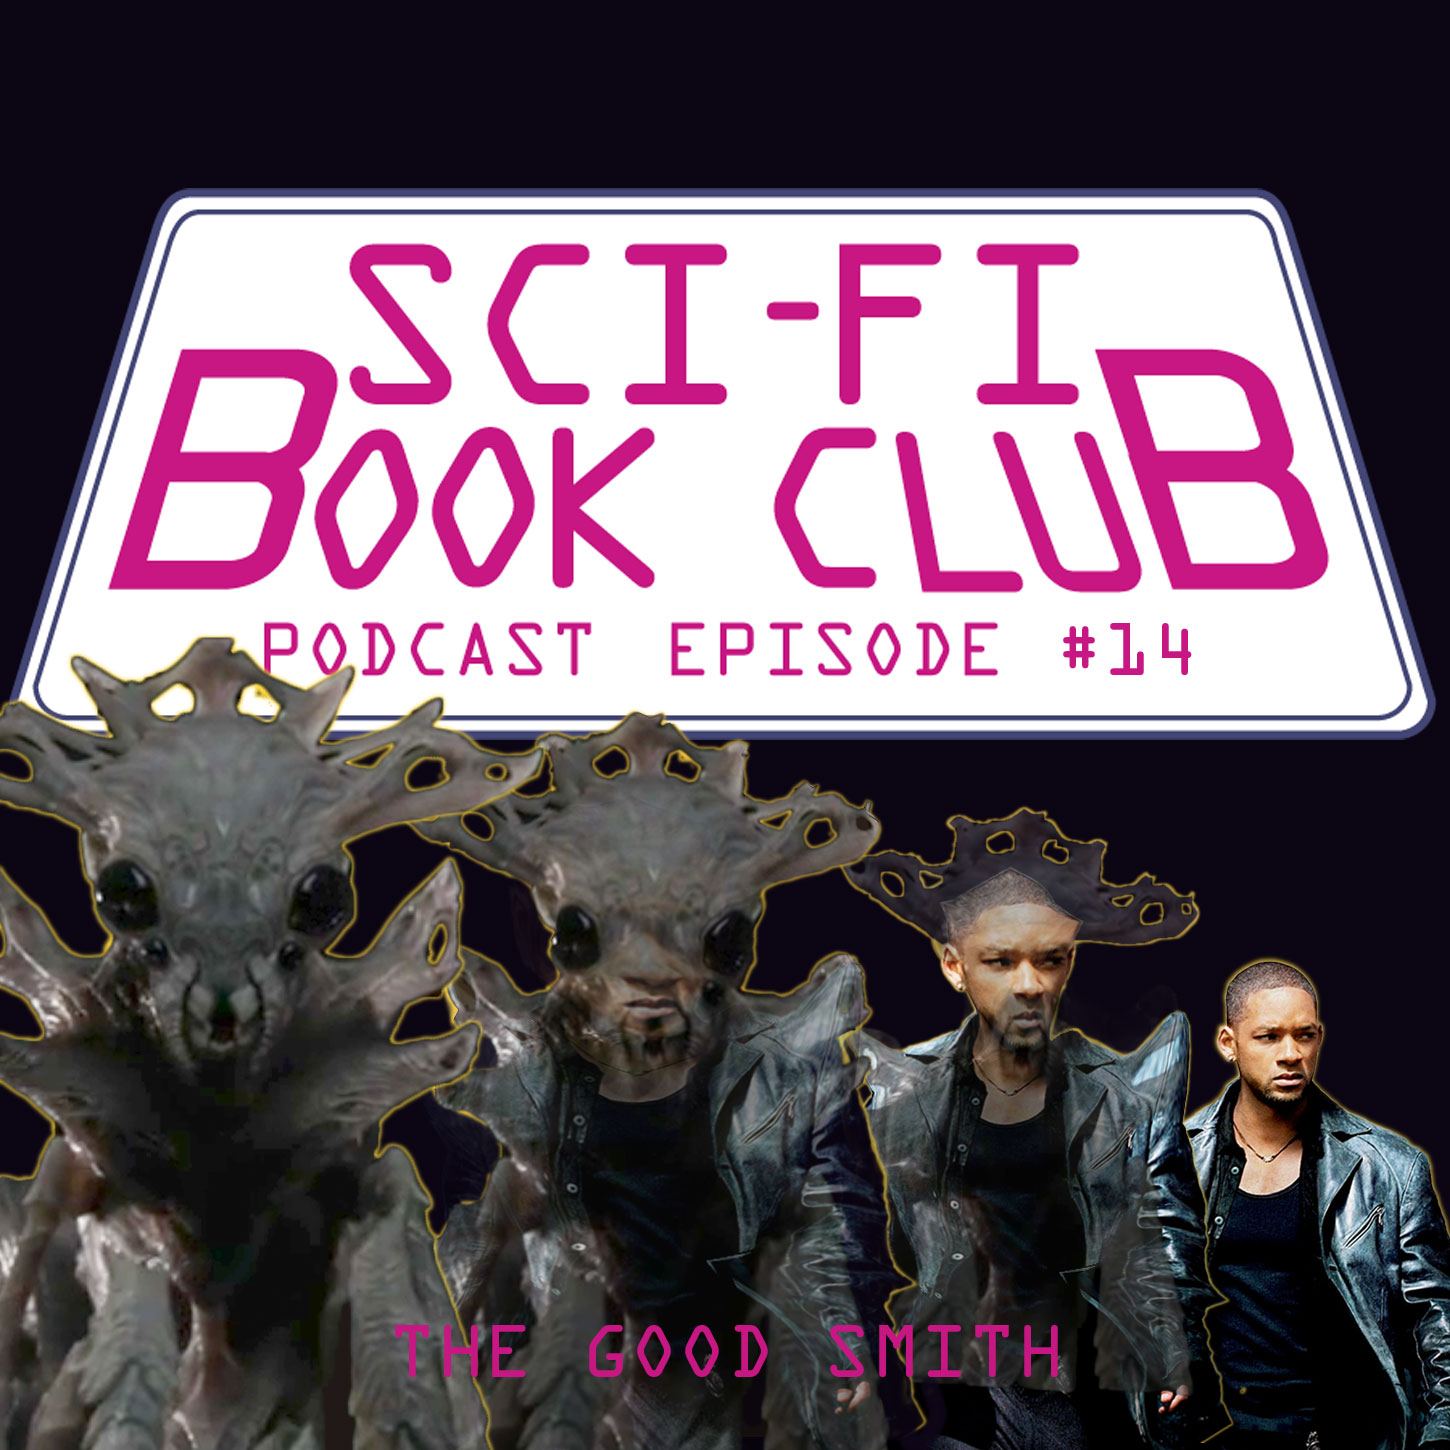 Sci-Fi Book Club Podcast #14: The Good Smith